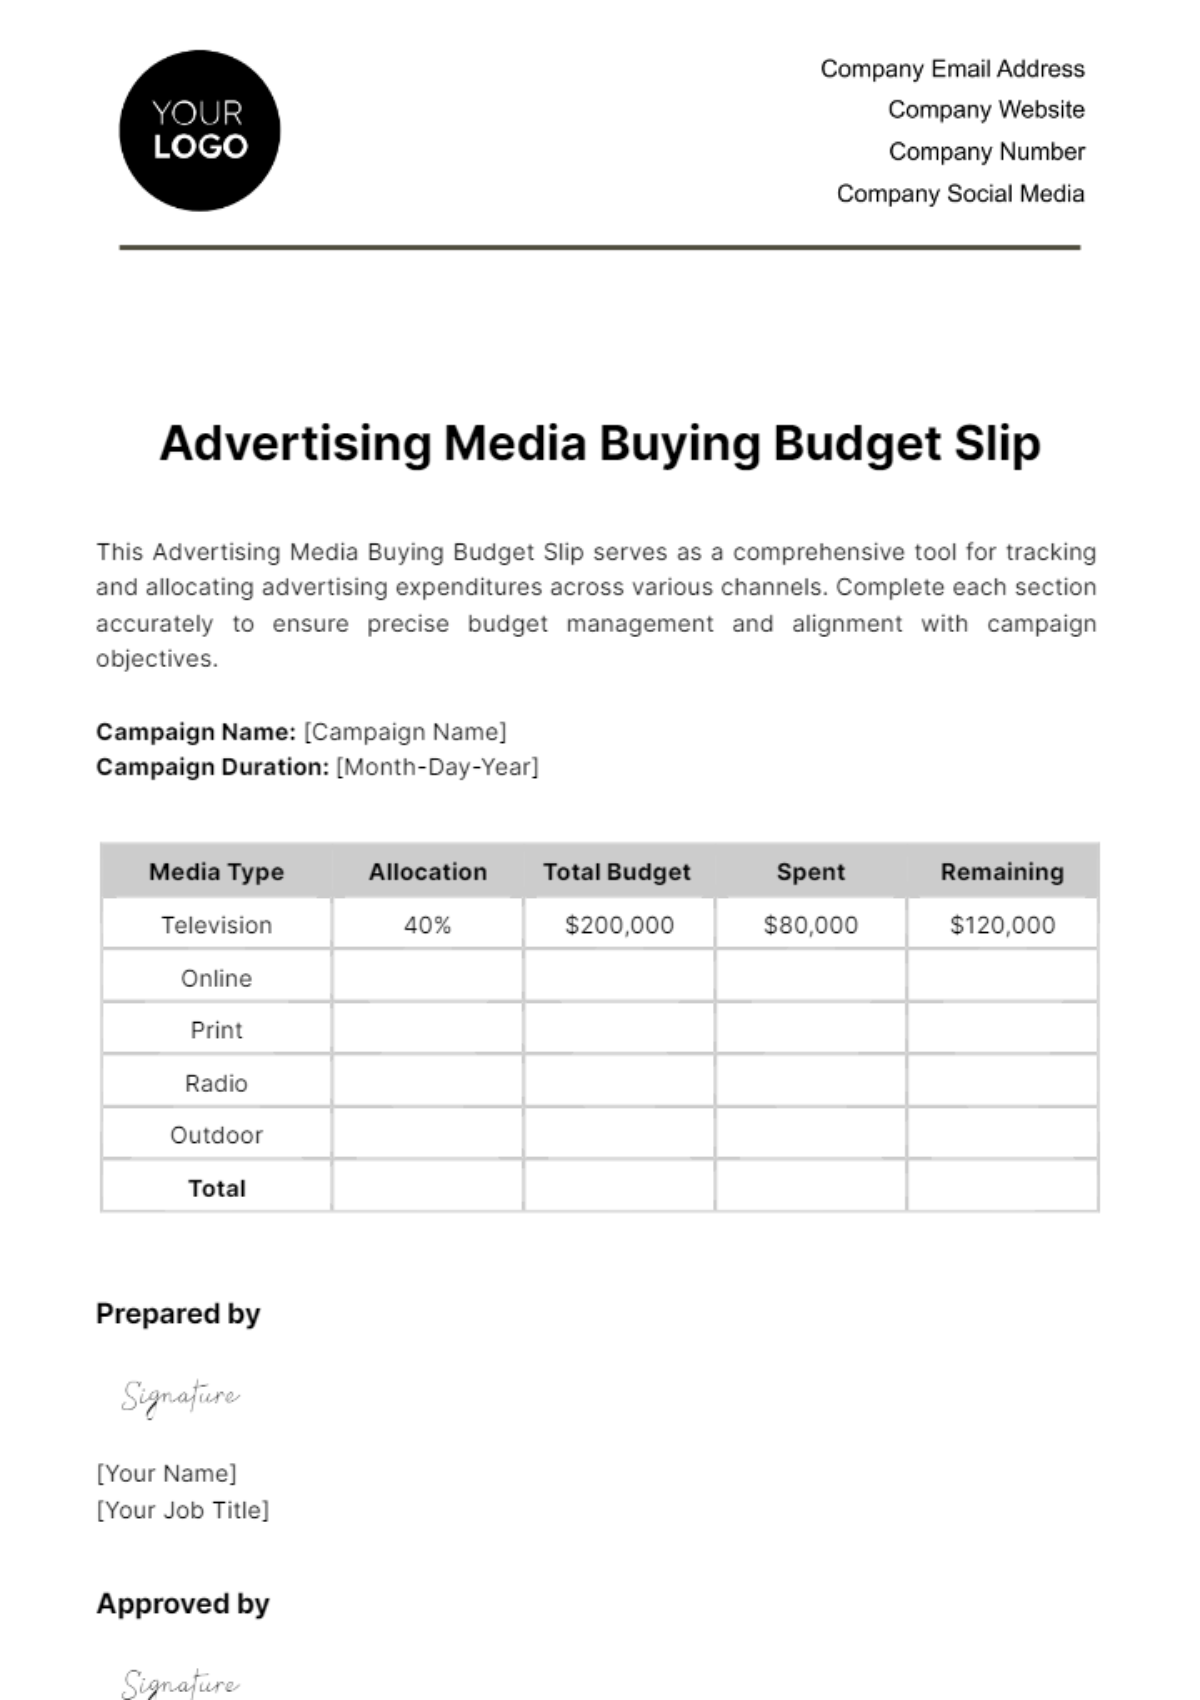 Advertising Media Buying Budget Slip Template